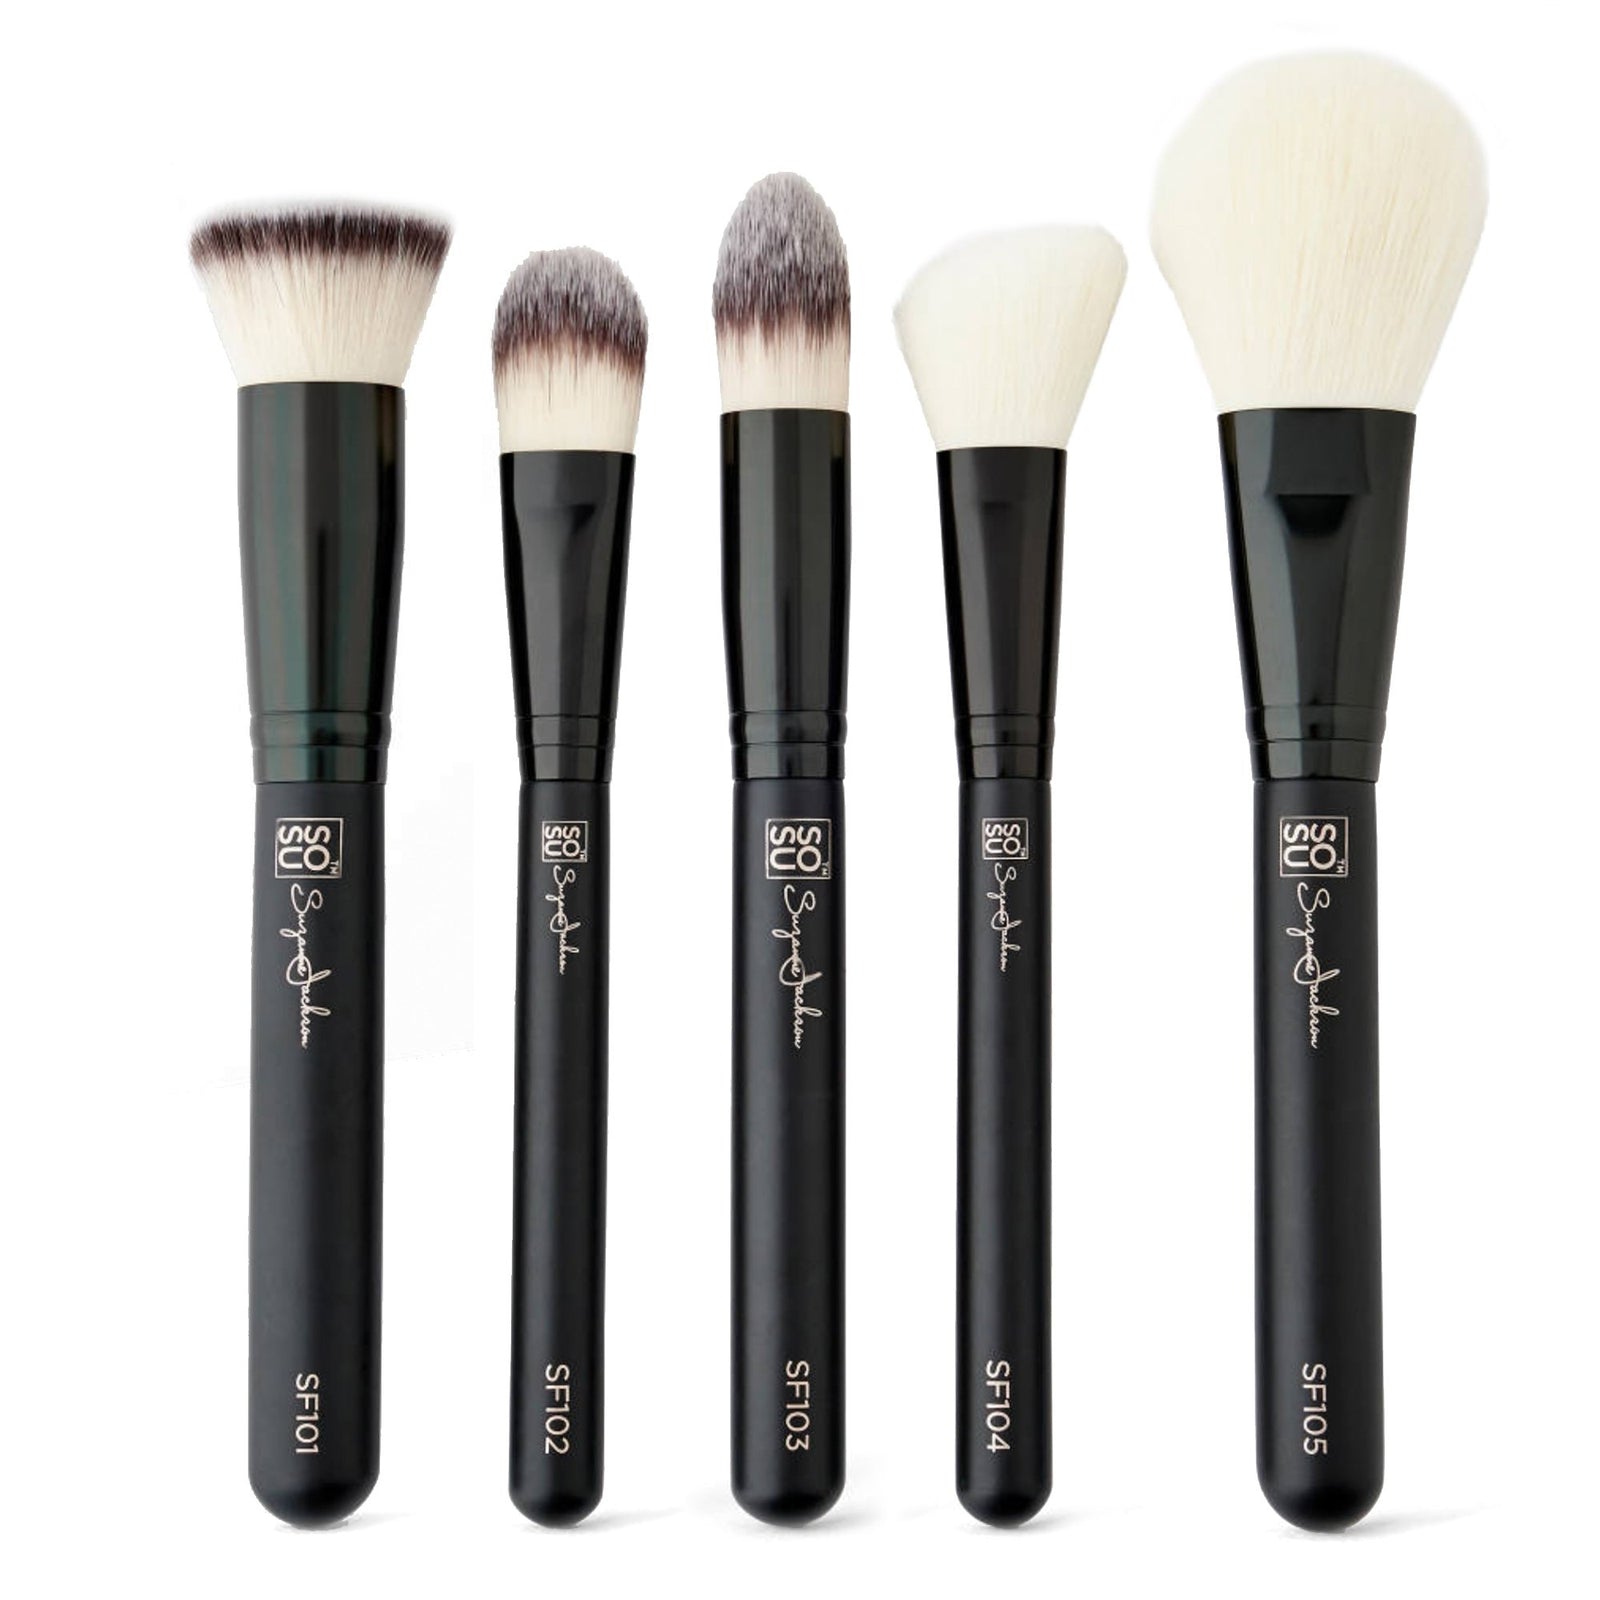 SOSU Cosmetics Face Collection Brush Set